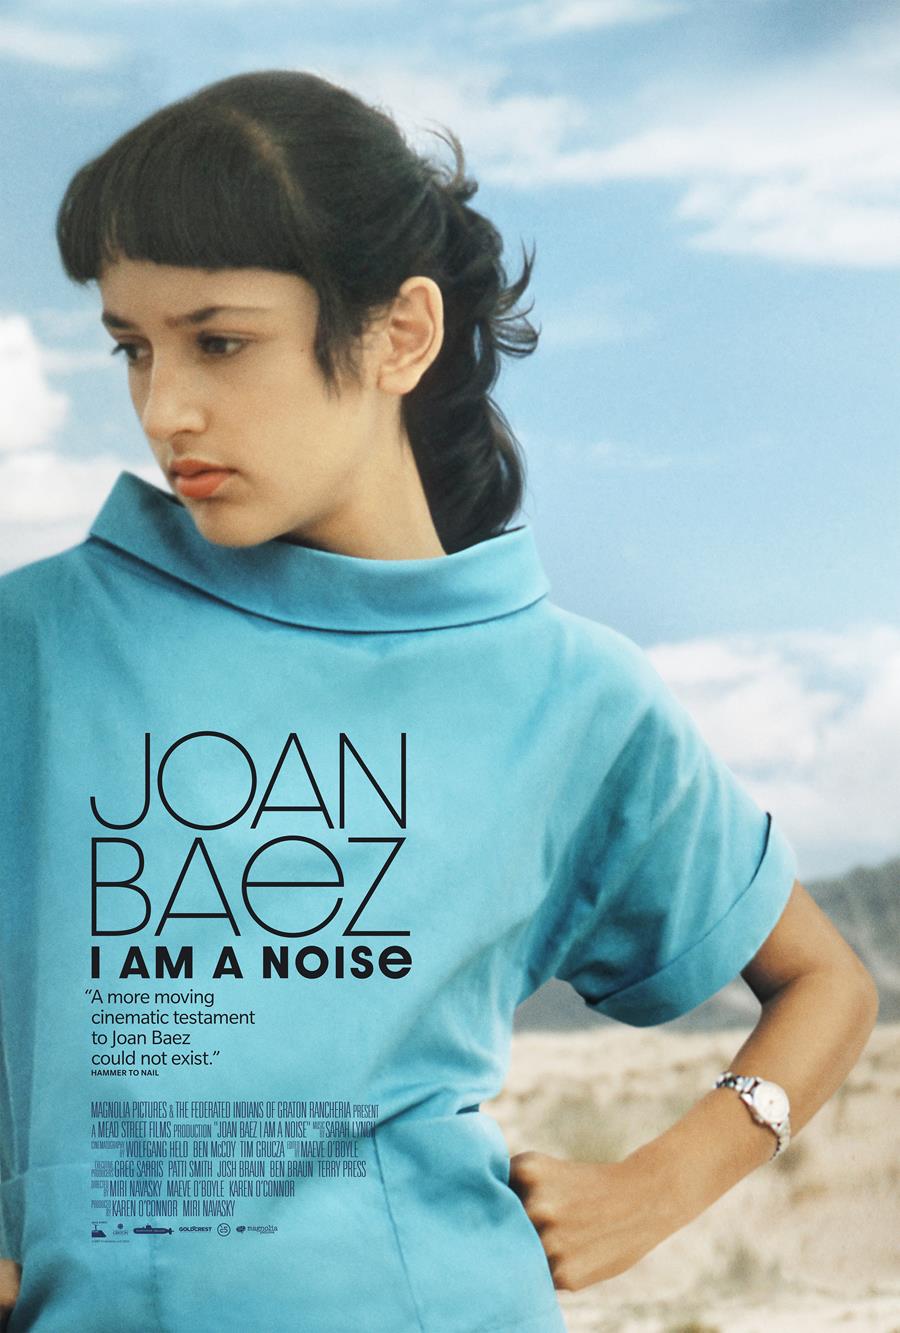 ‘Joan Baez - I Am a Noise’ movie poster